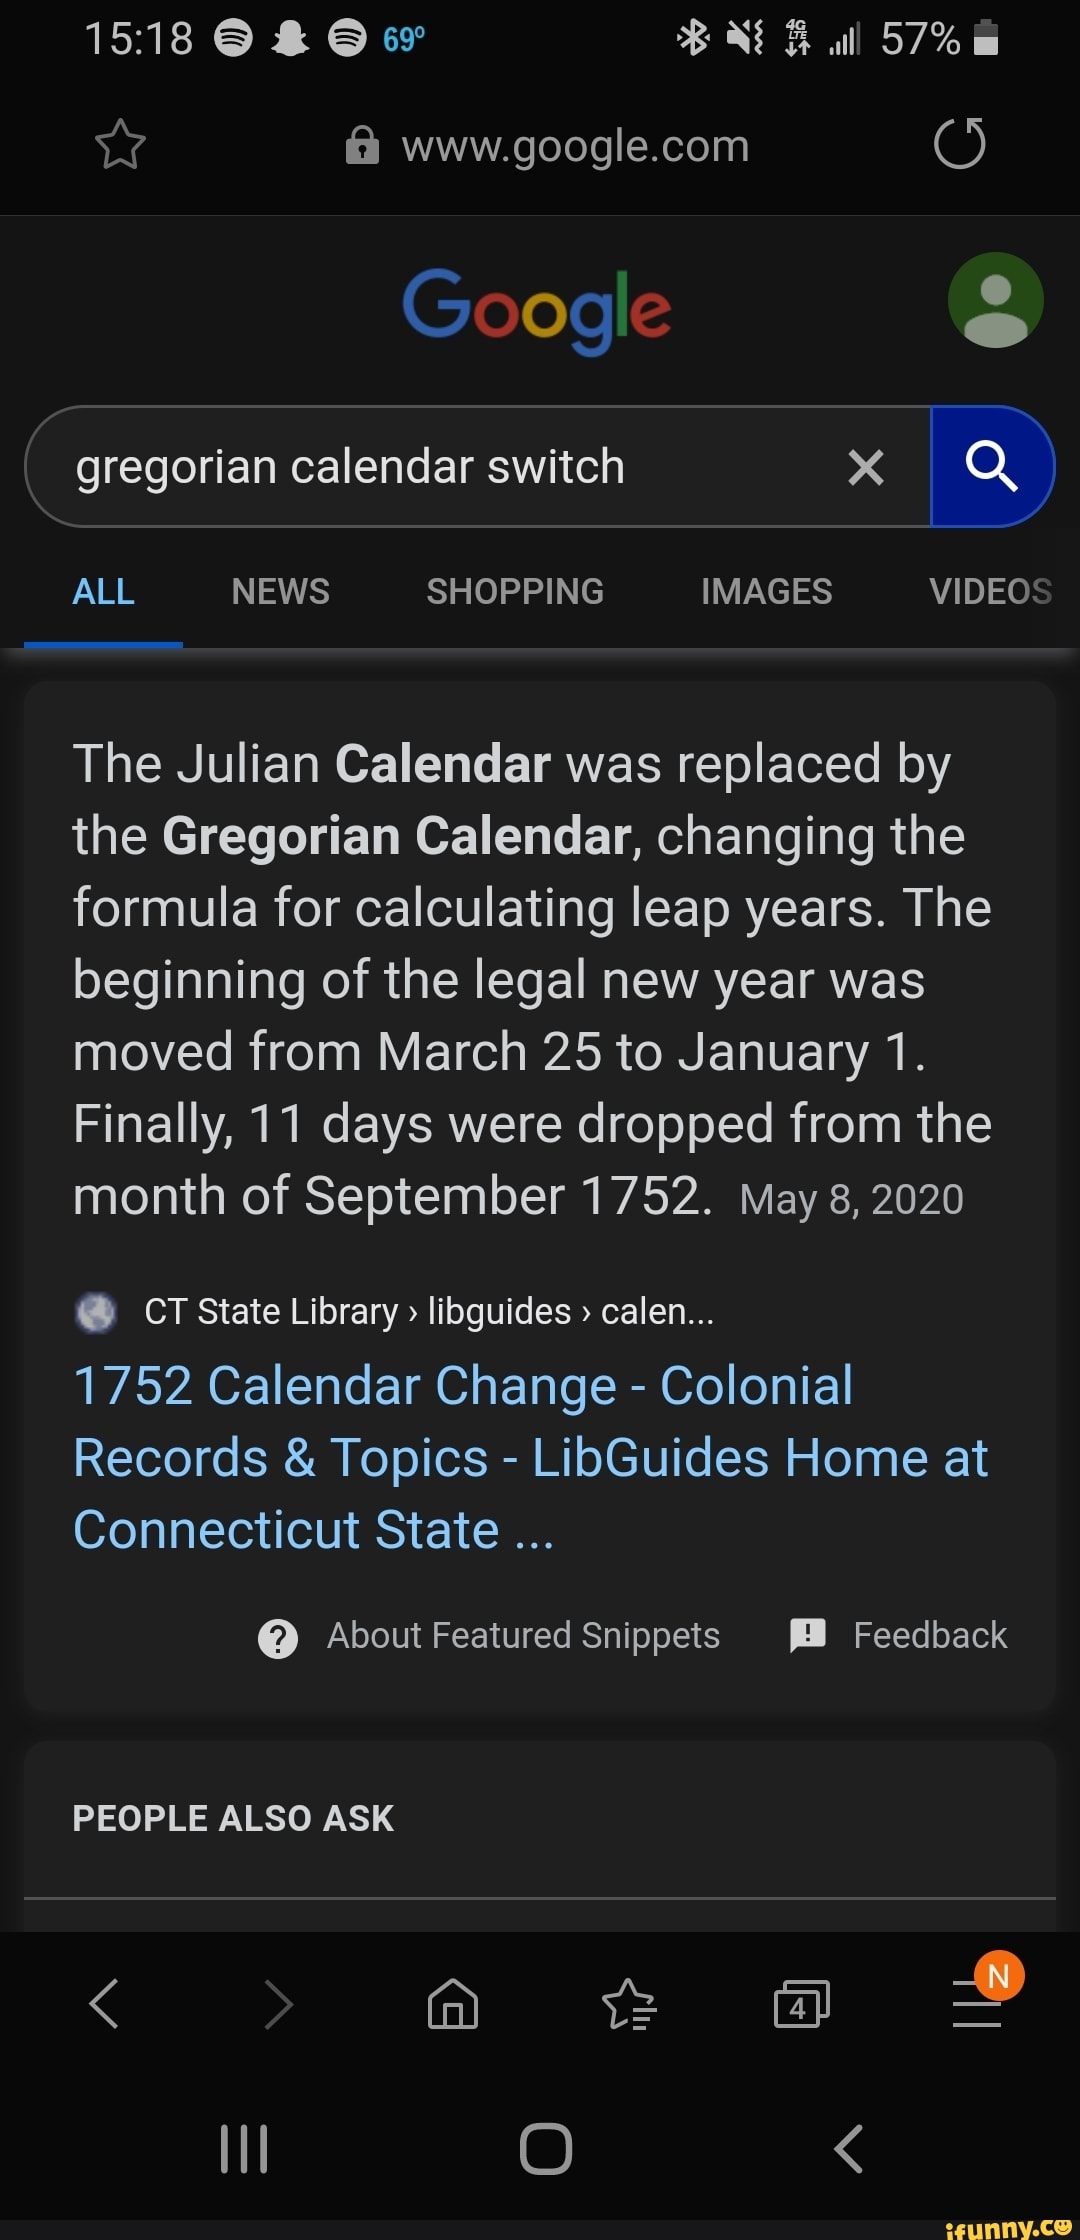 The Julian Calendar was replaced by the Gregorian Calendar, changing